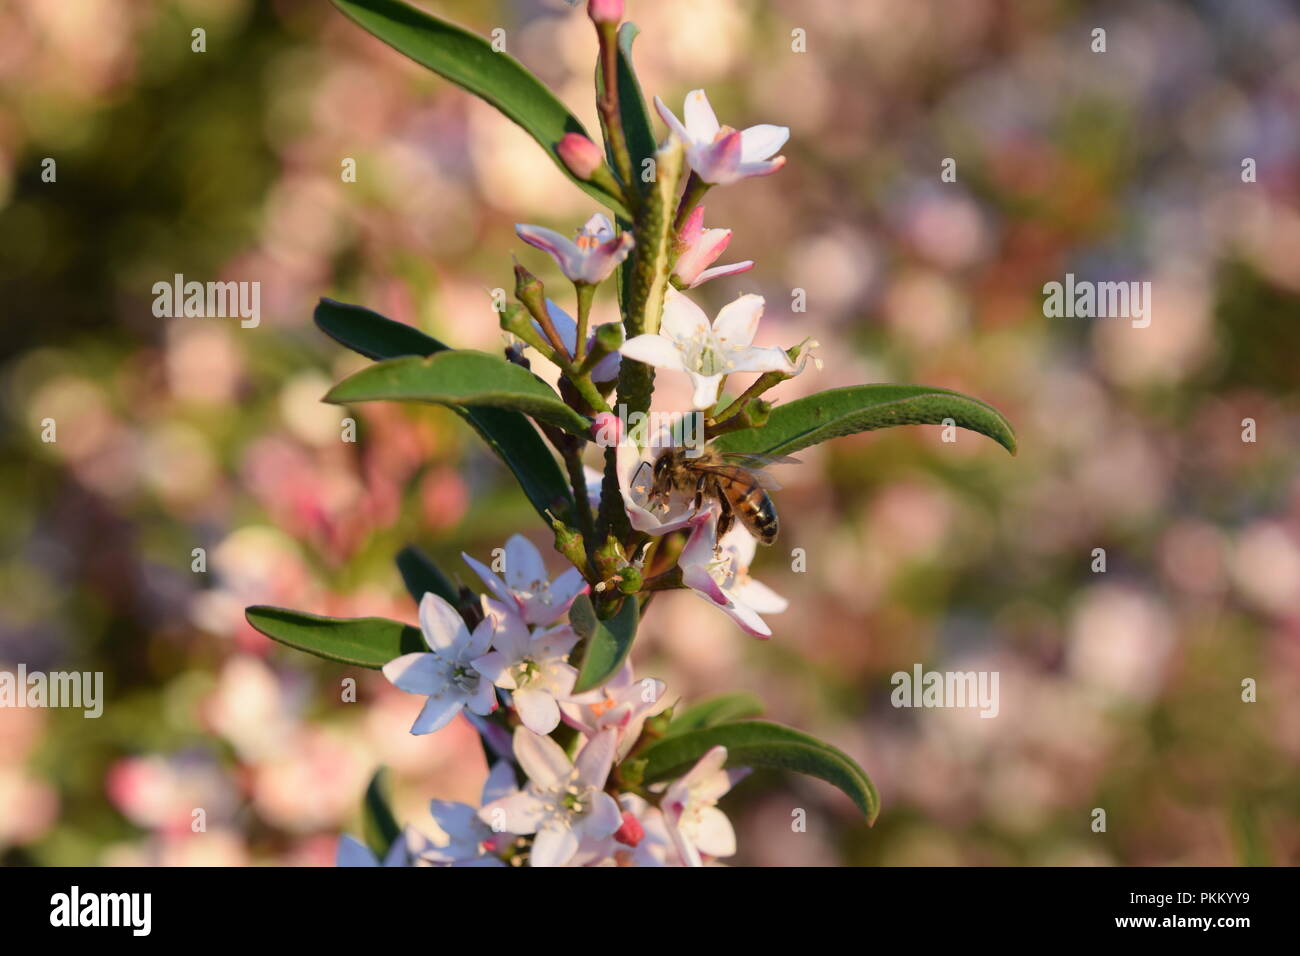 Bee on Flower Stock Photo